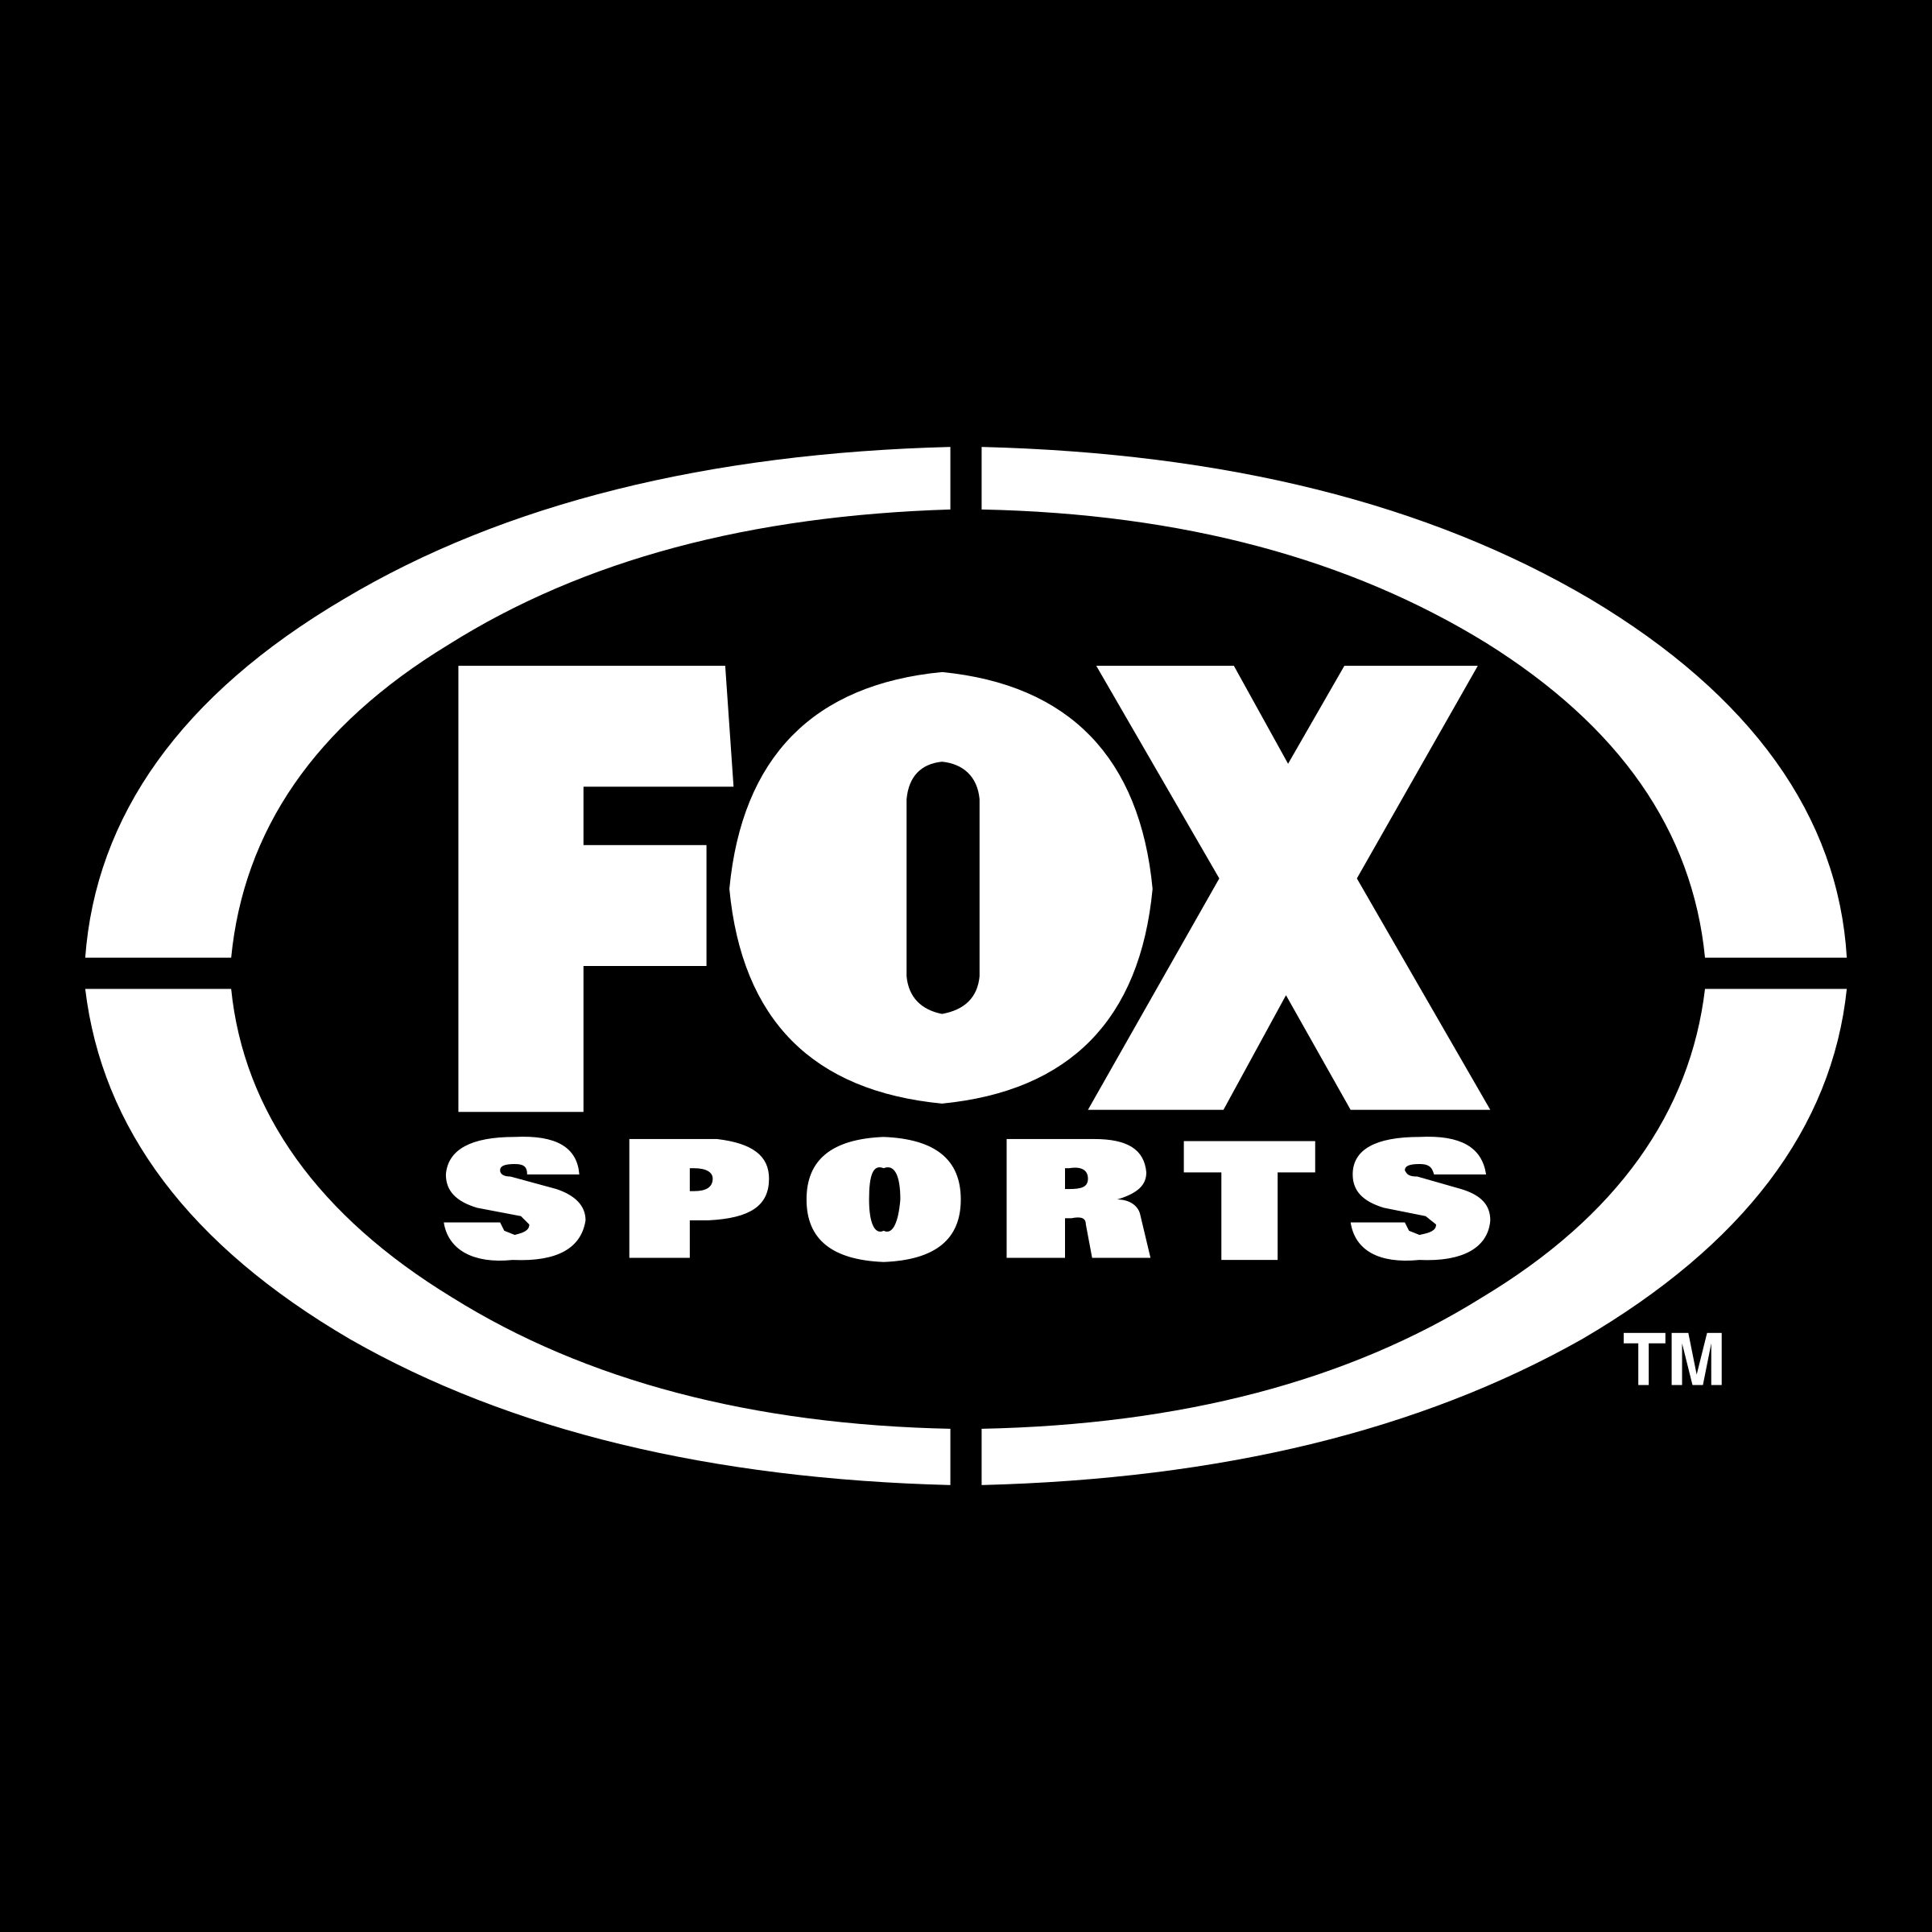 Fox Sports Logo - Fox Sports Logo PNG Transparent & SVG Vector - Freebie Supply